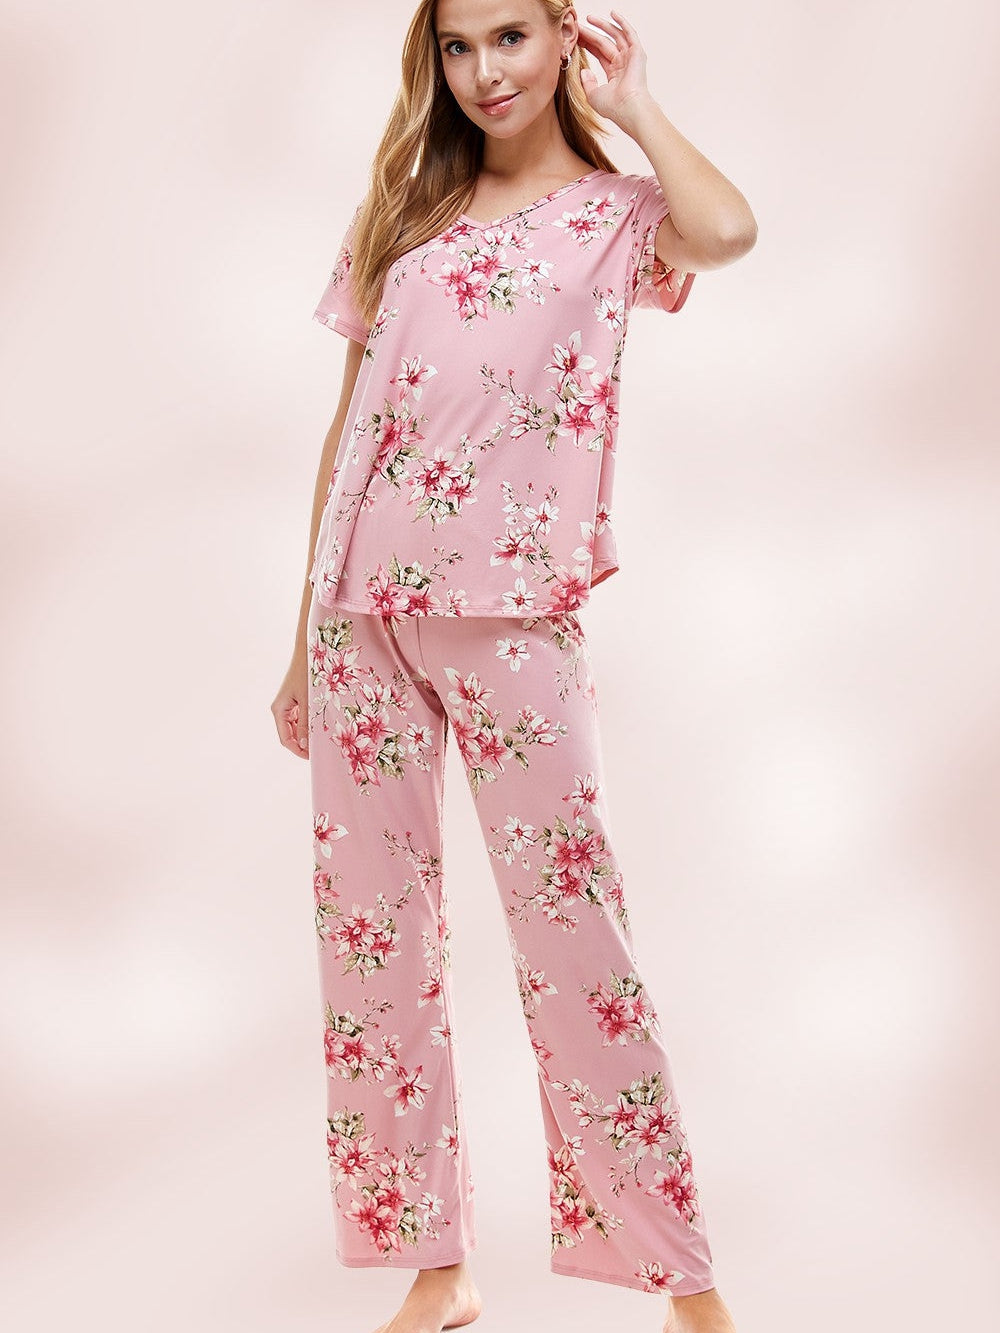 Good Morning Sunshine Pink Floral Pajama Set-Women's Clothing-Shop Z & Joxa